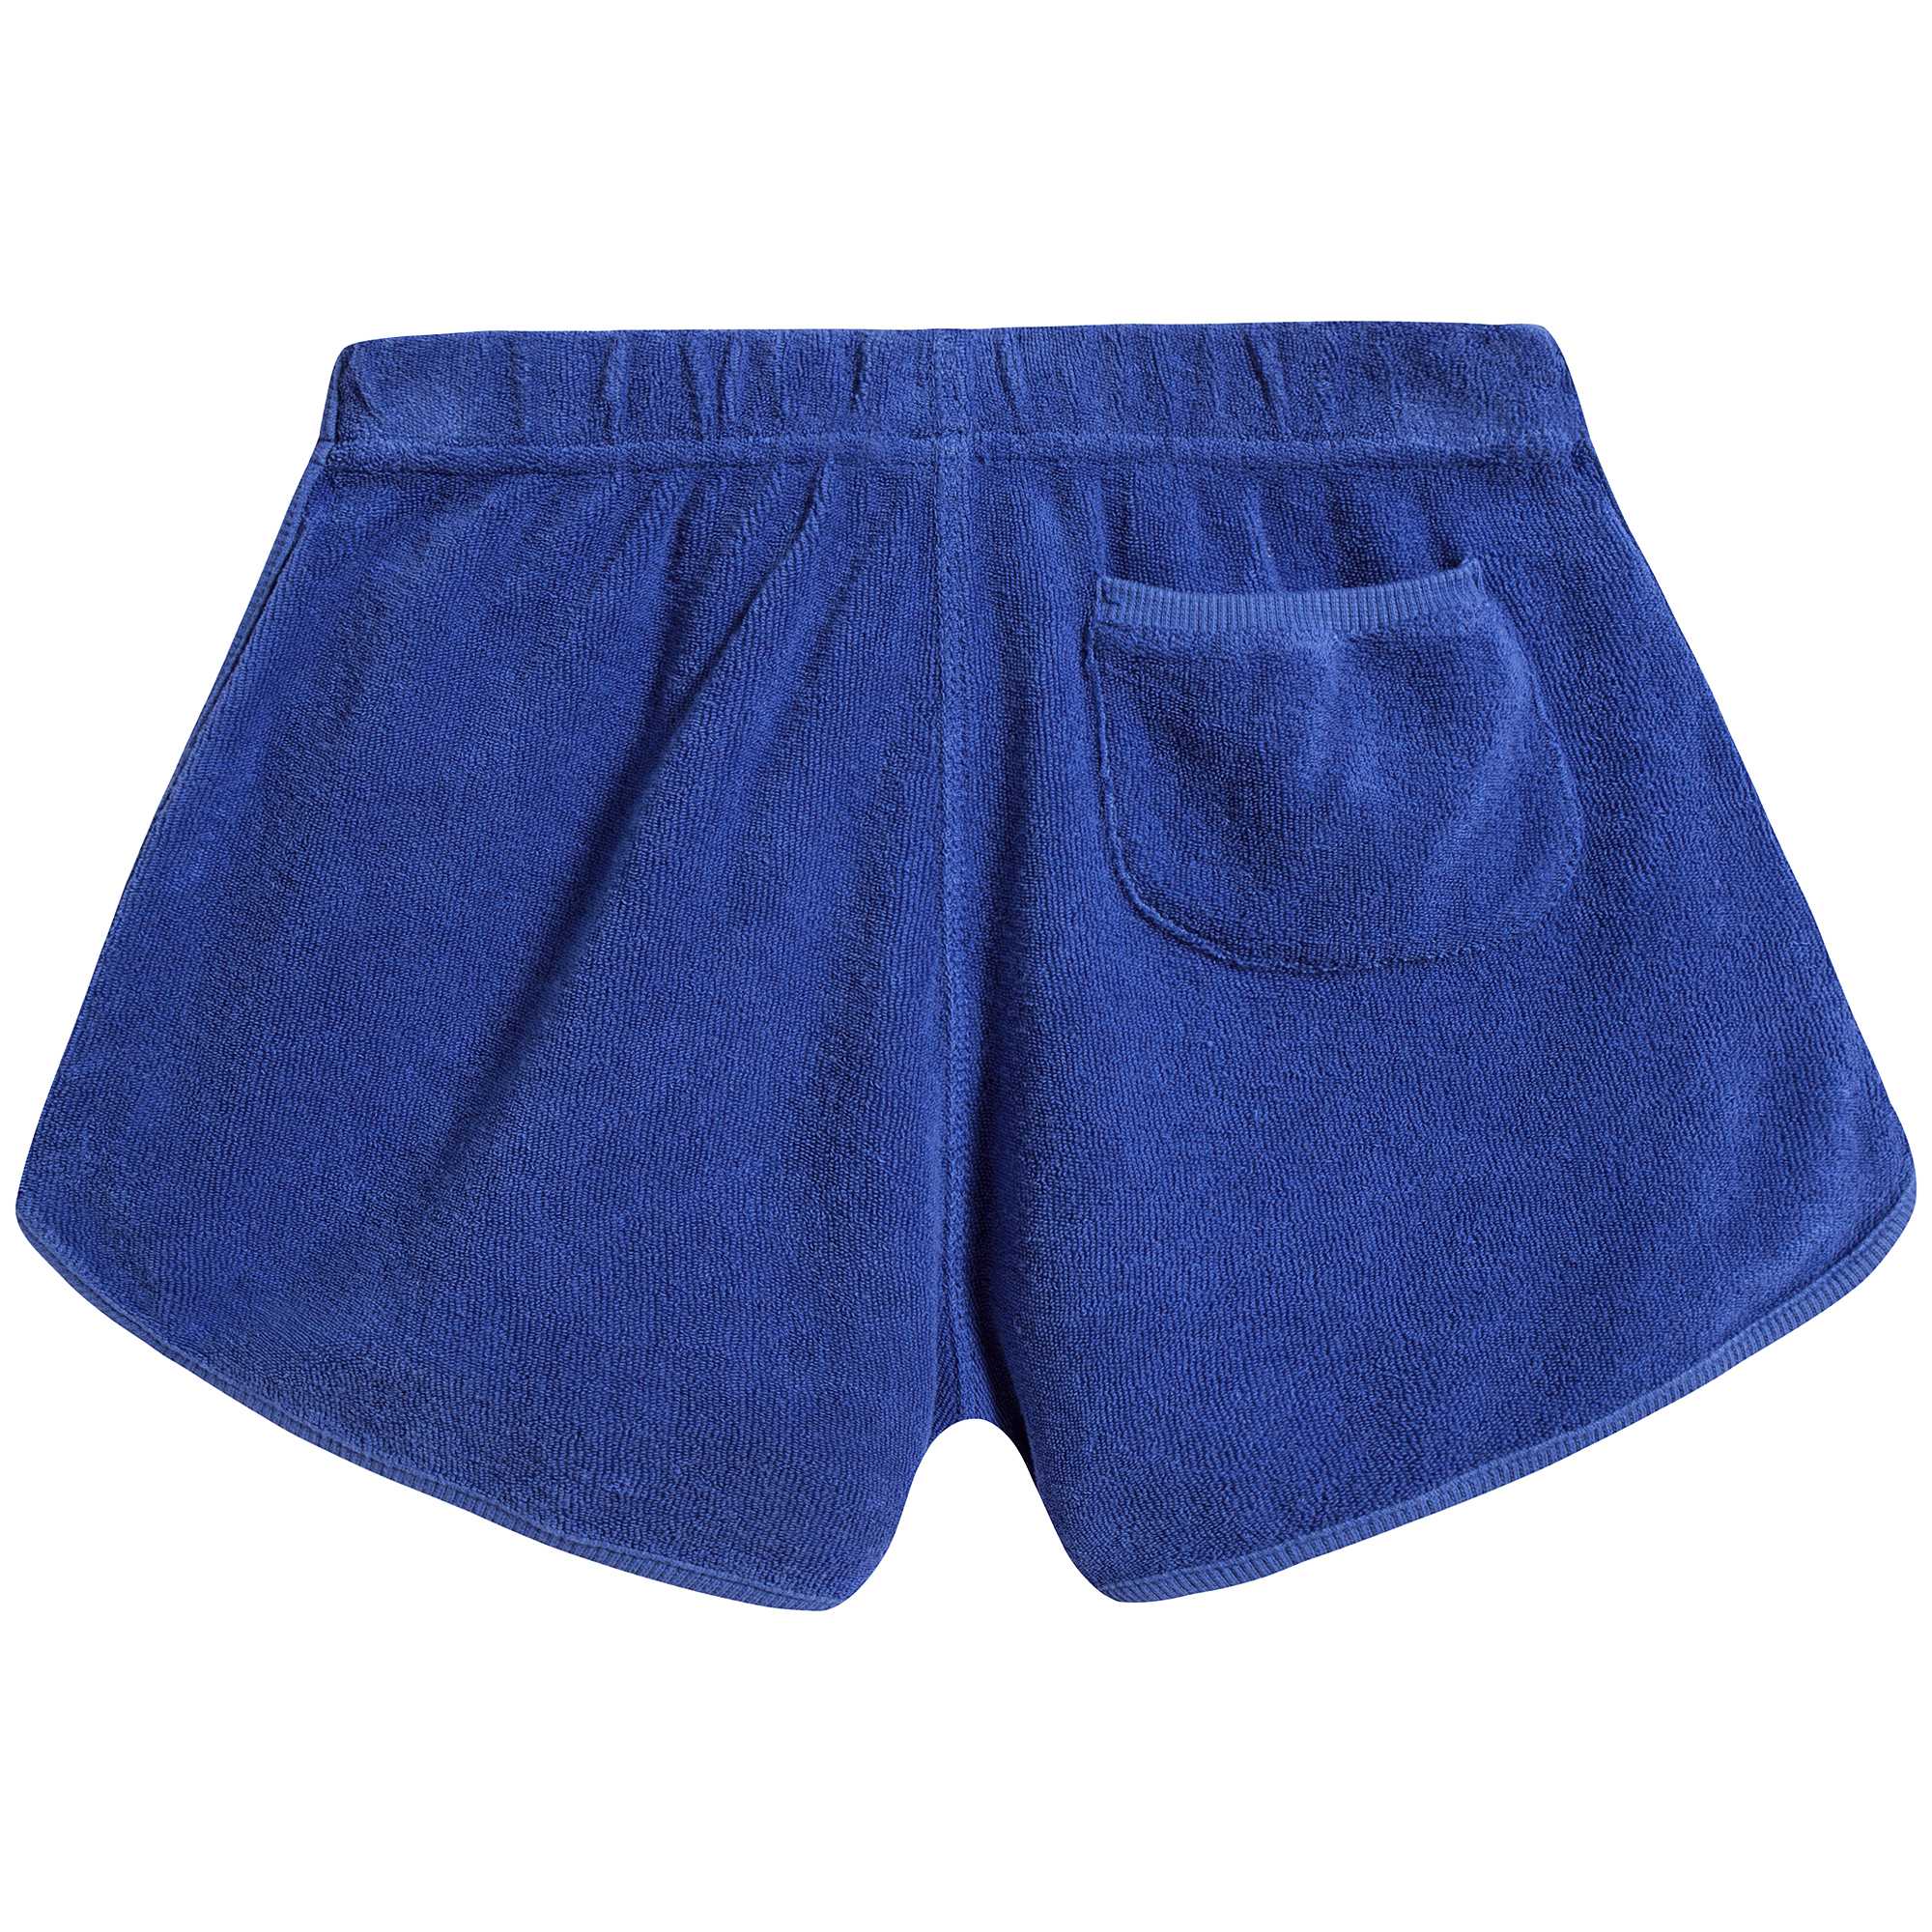 Boys and Girls Royal Blue Cotton Shorts